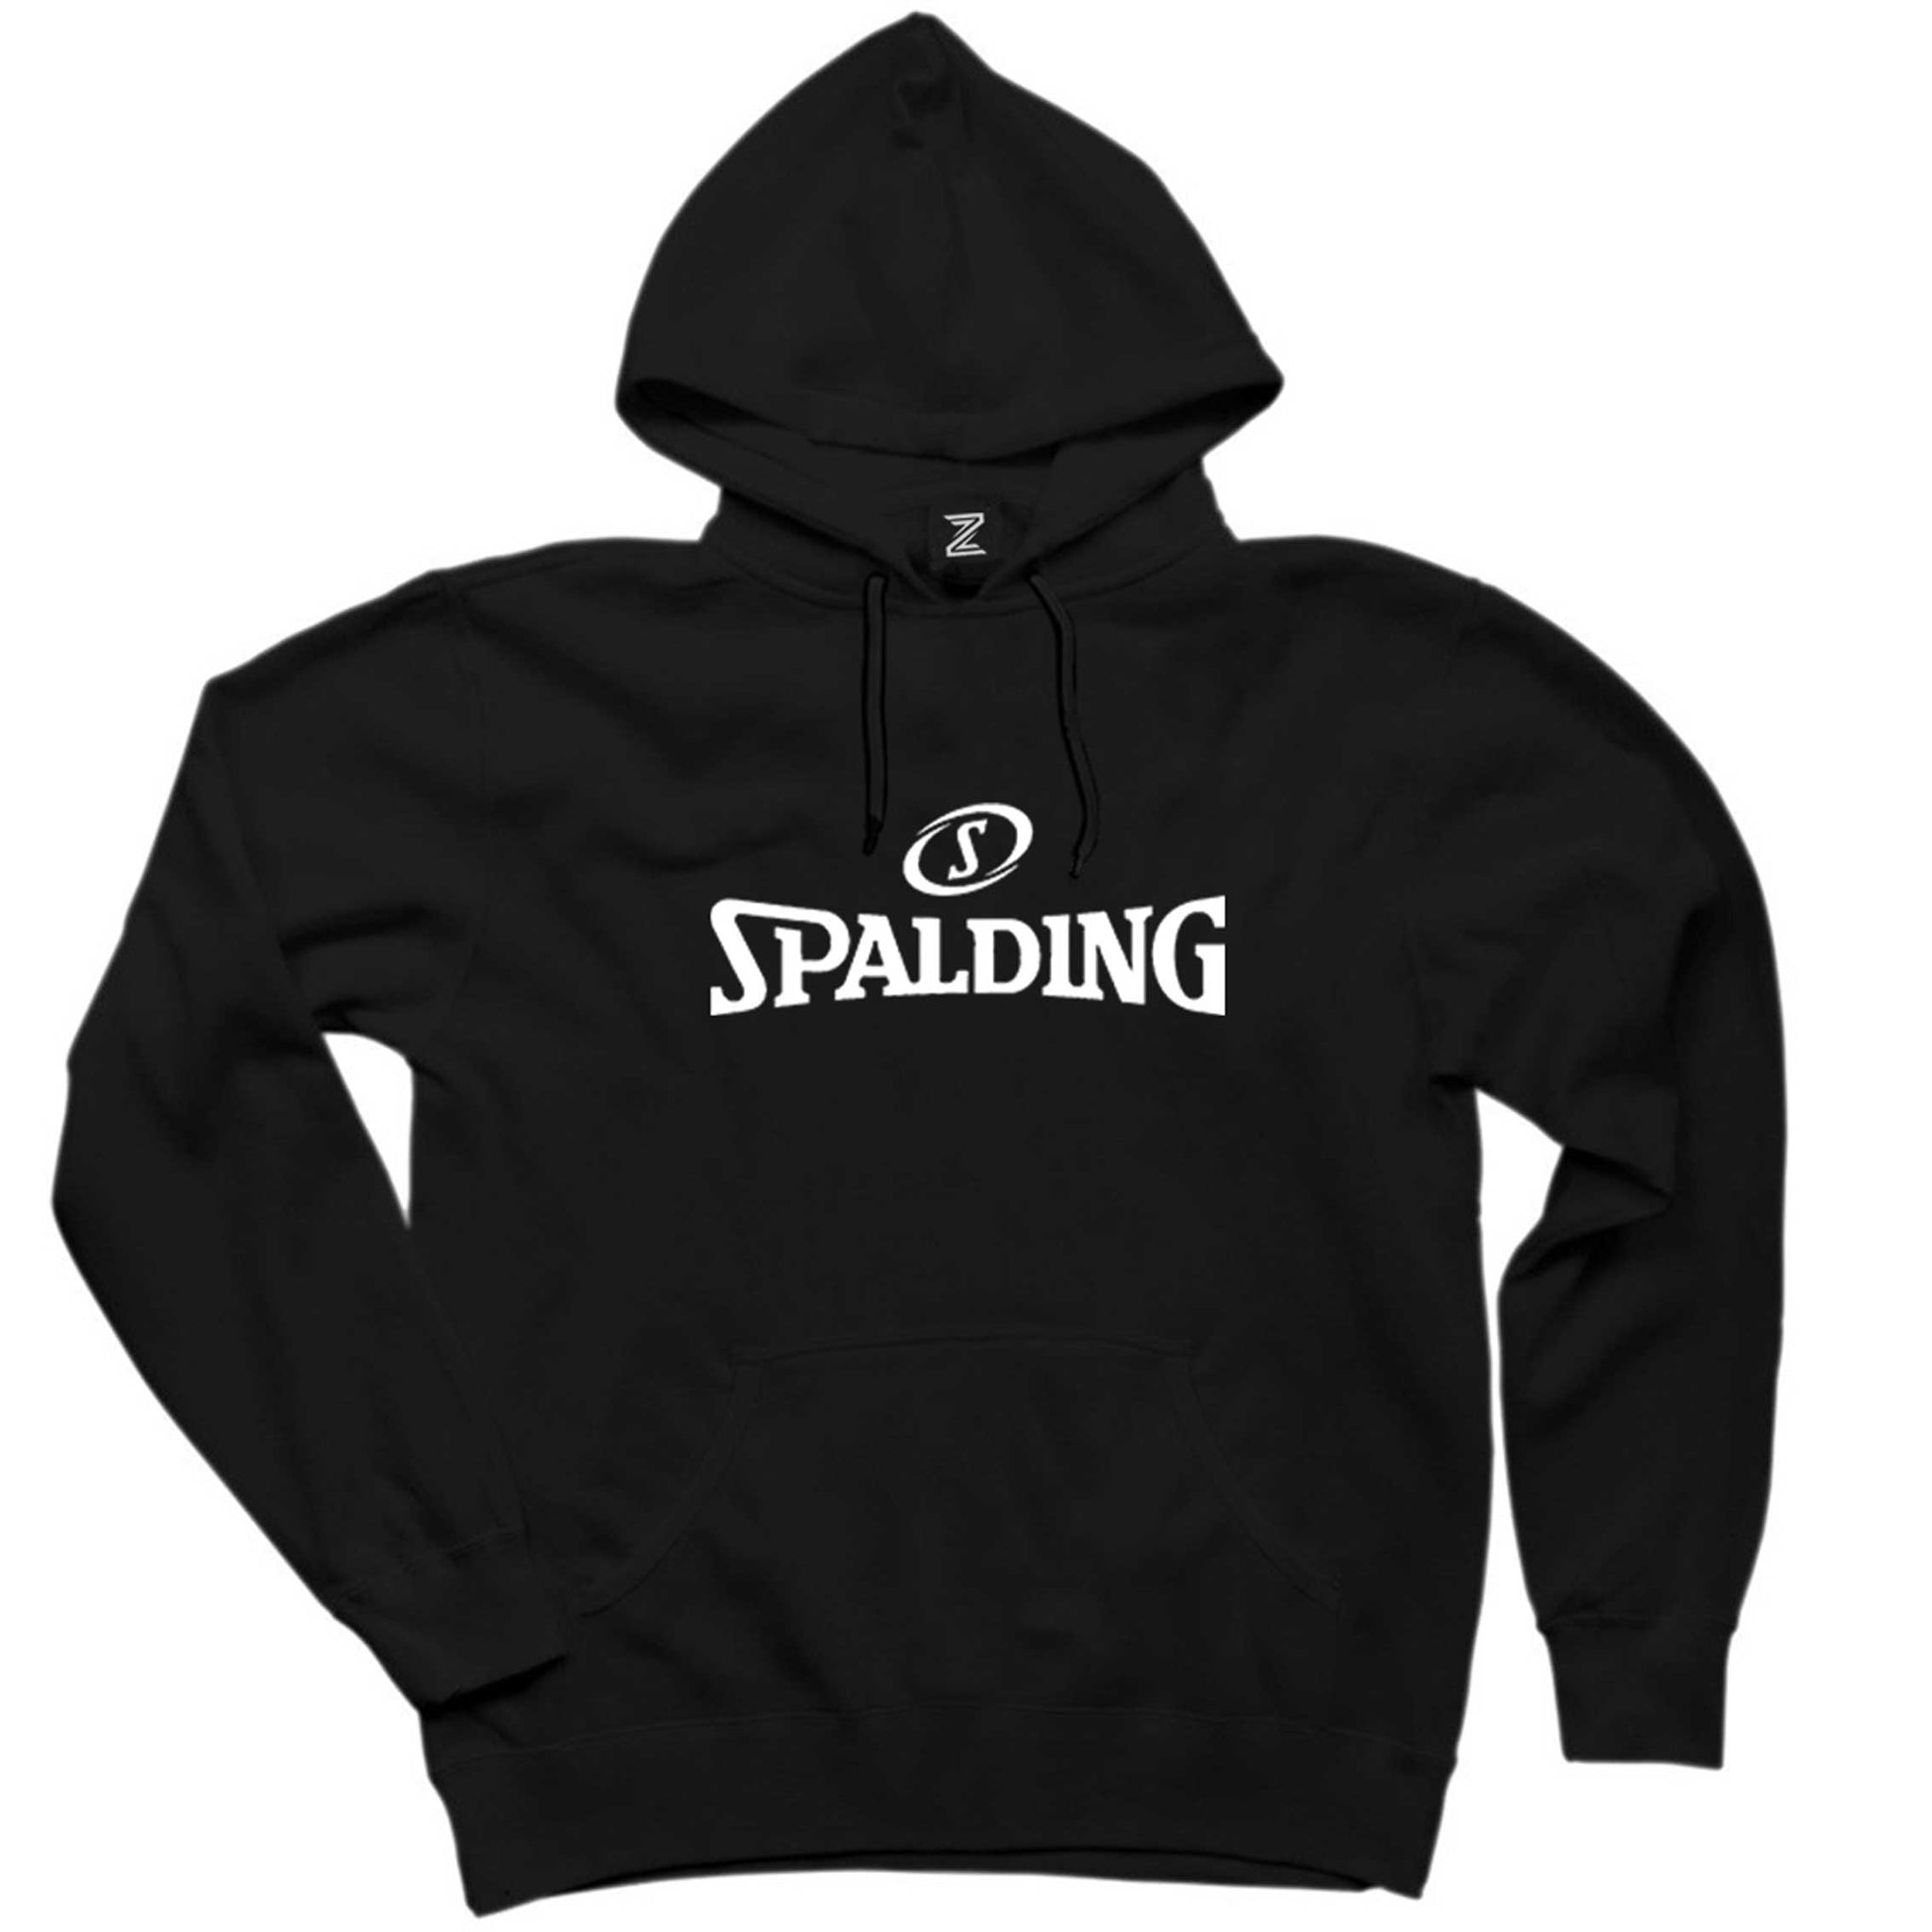 White Spalding Siyah Kapşonlu Sweatshirt Hoodie